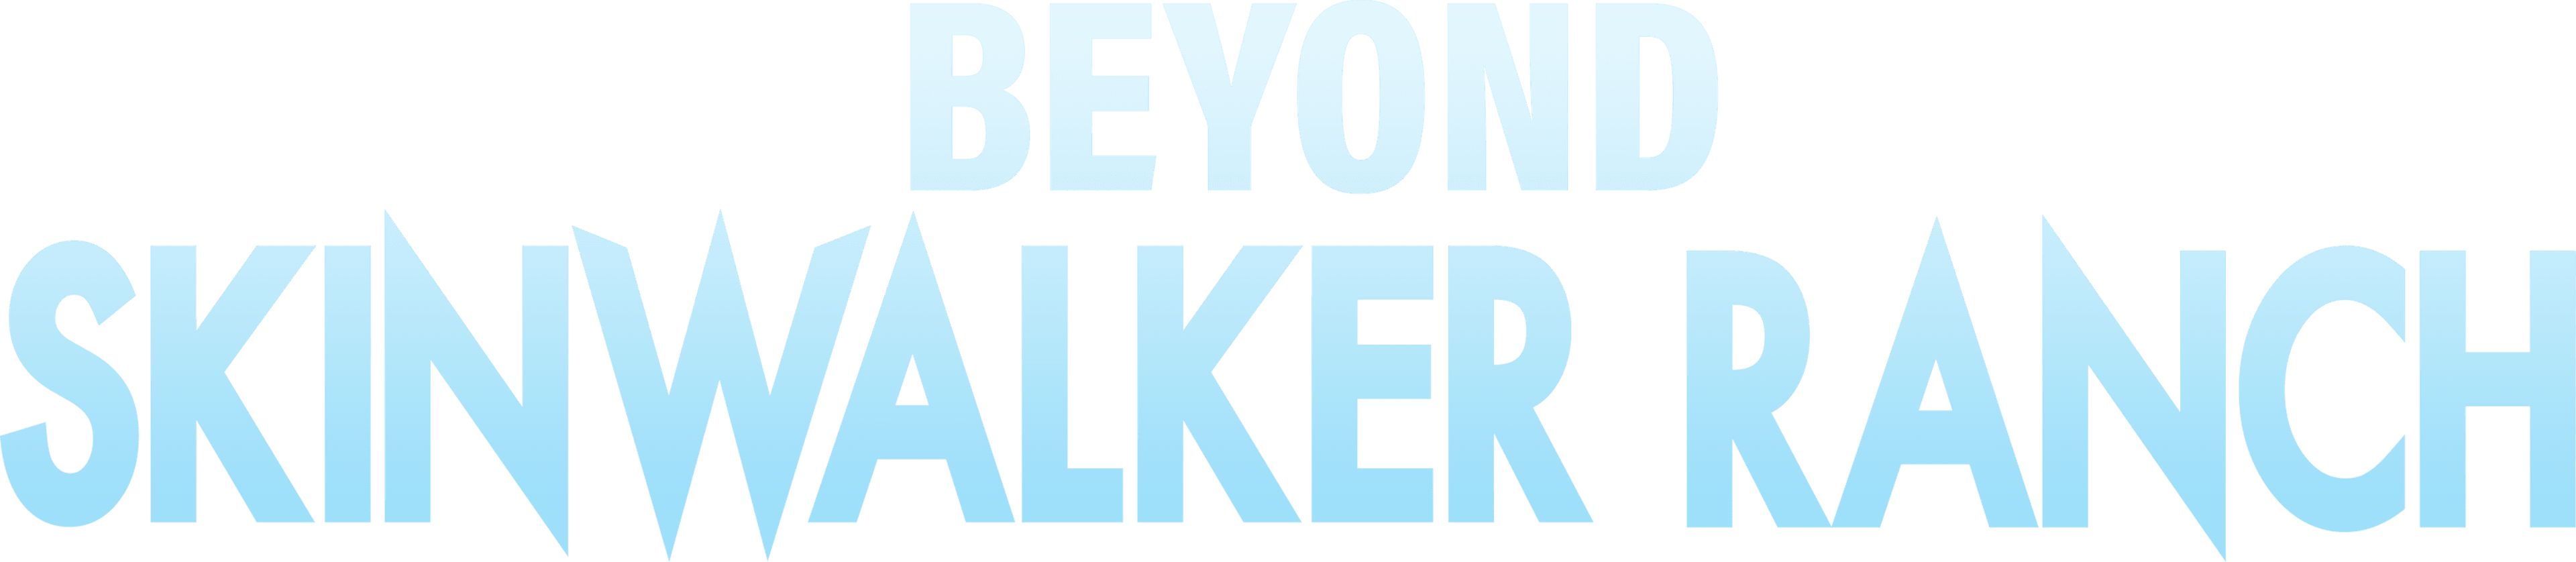 Beyond Skinwalker Ranch logo